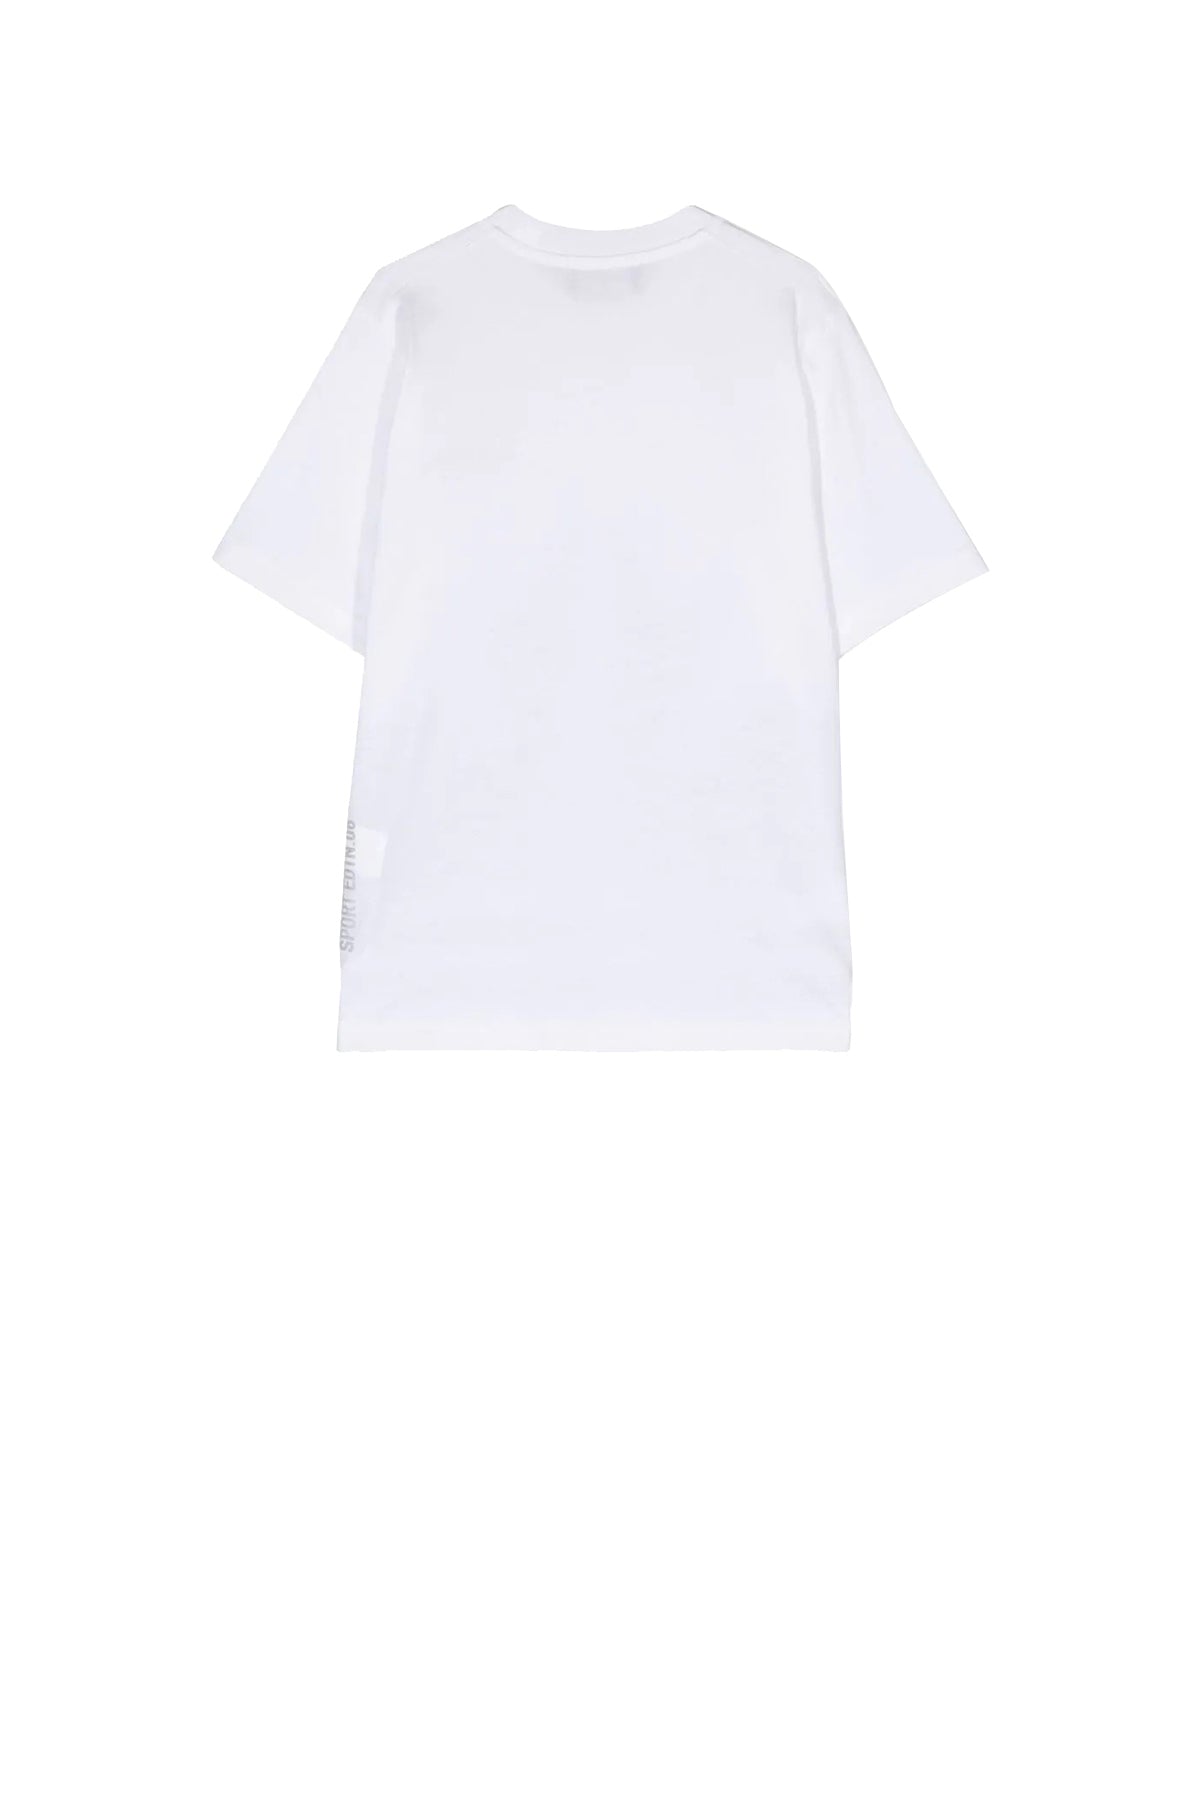 DSQUARED SPORT T-Shirt Unisex Logo Frontale Bianco Bianco